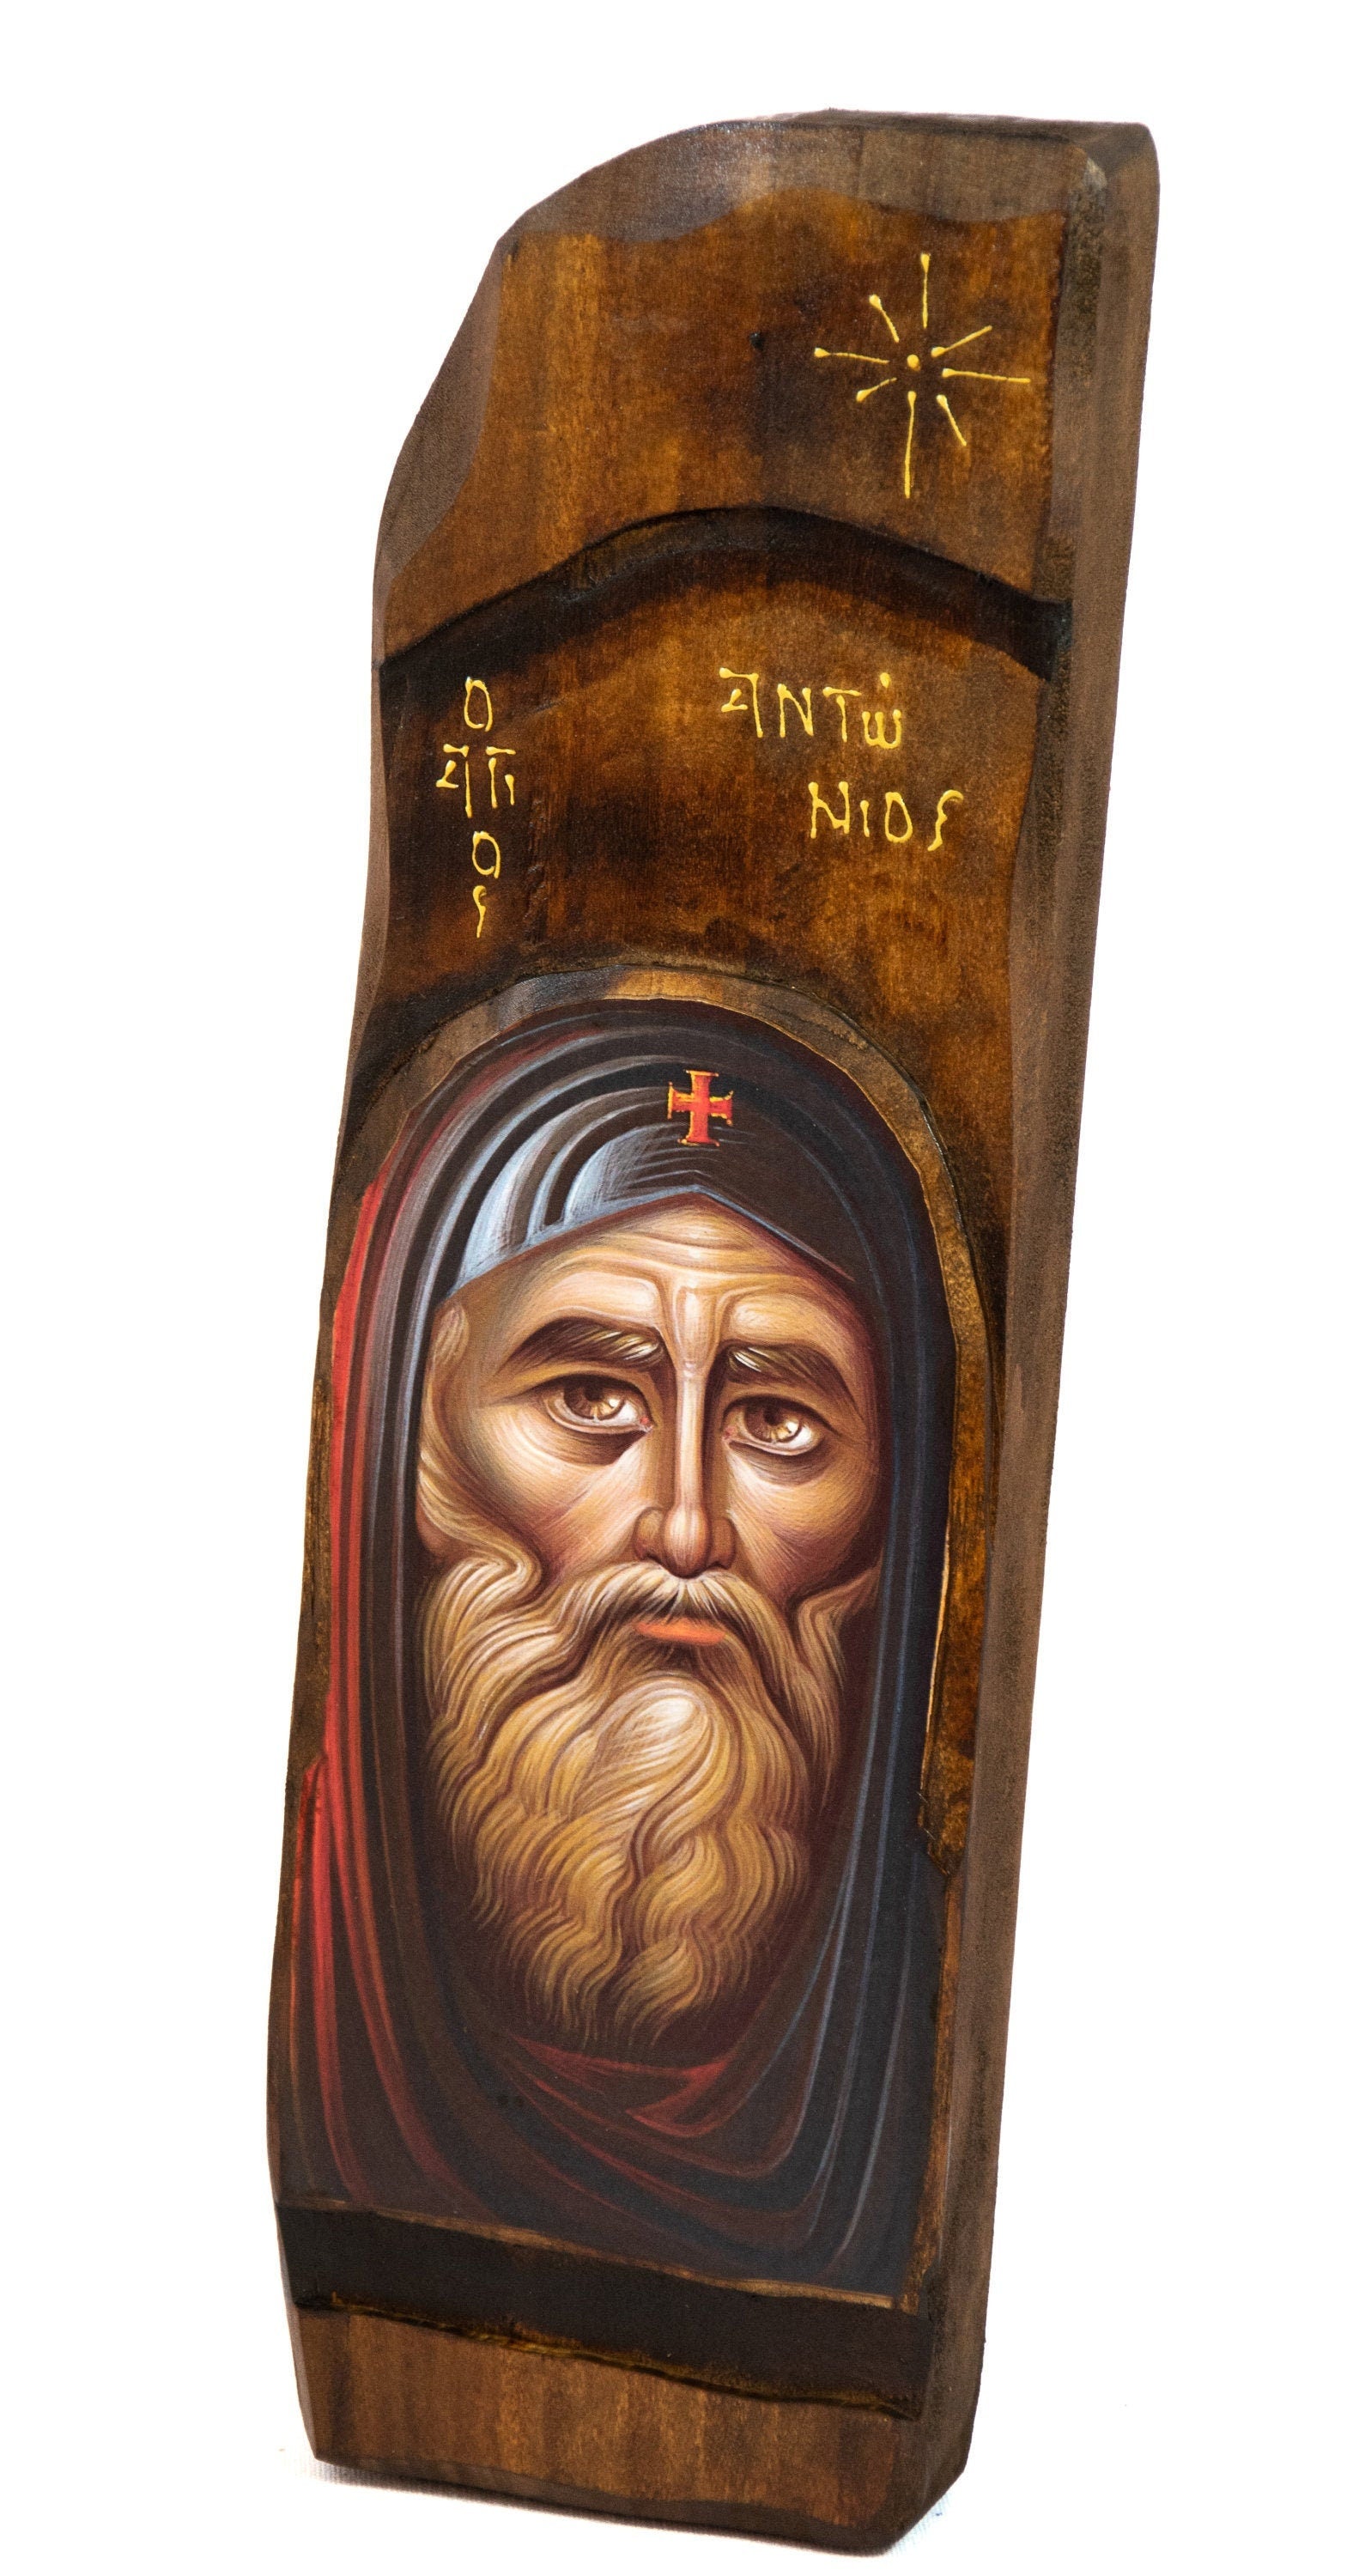 Saint Anthony icon, Handmade Greek Orthodox icon of St Anthony the Great, Byzantine art wall hanging wood plaque icon, religious decor TheHolyArt